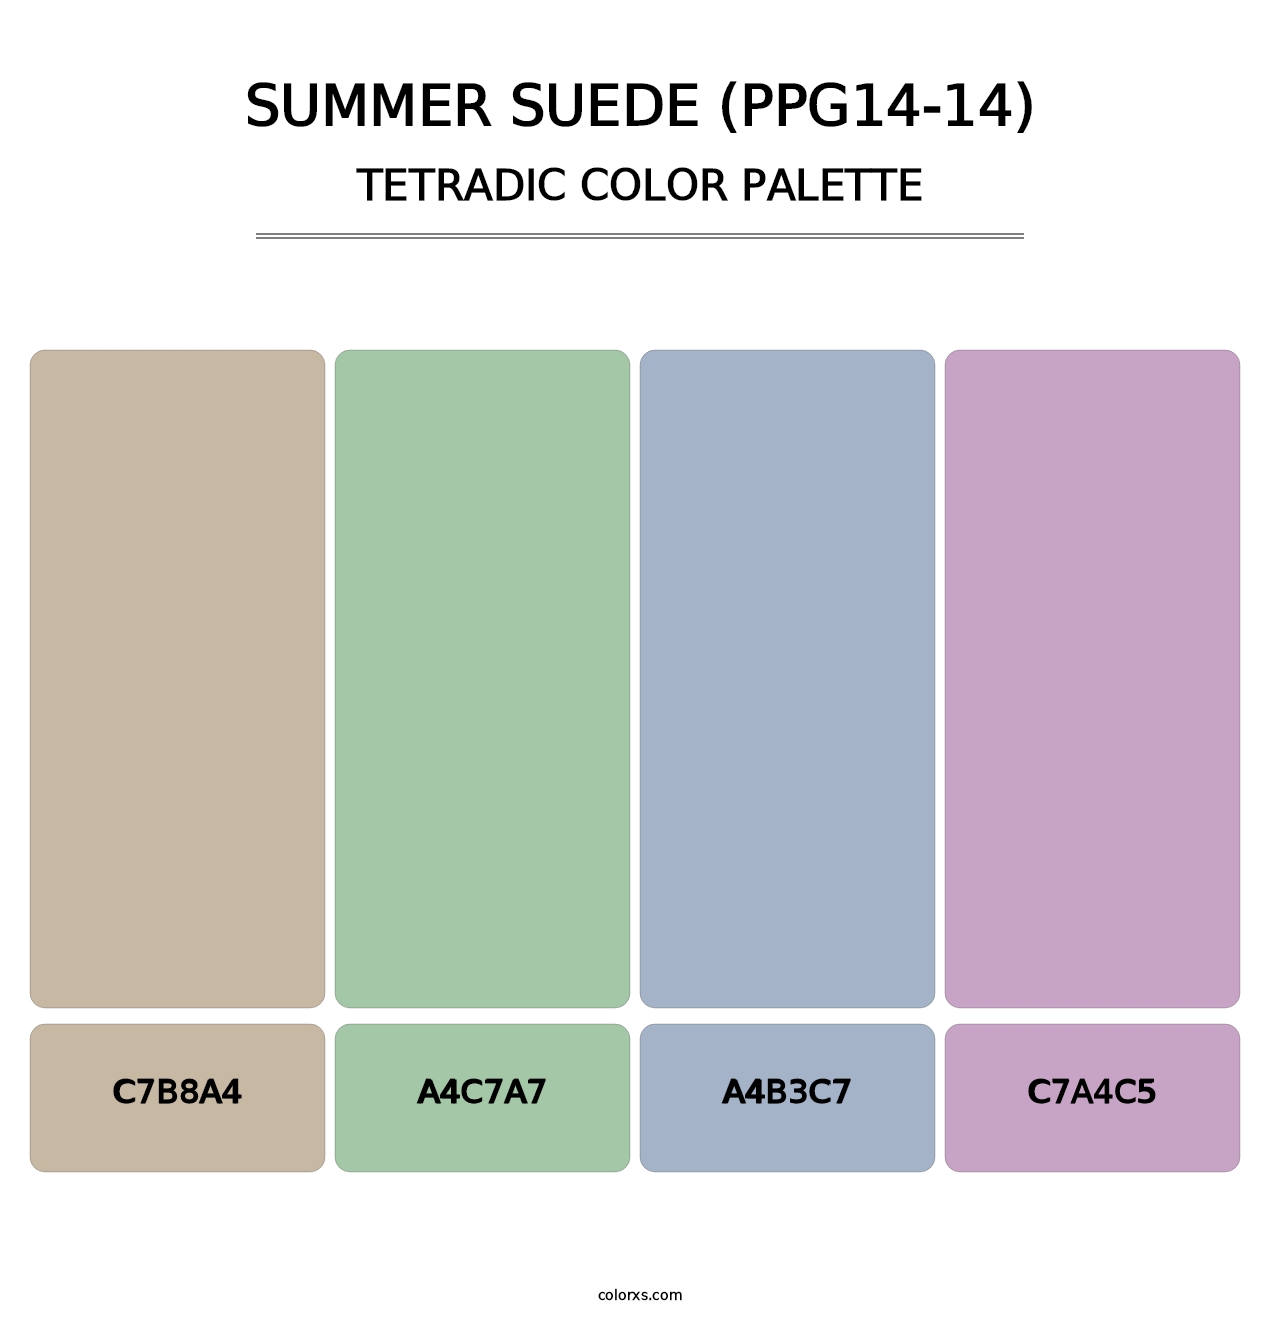 Summer Suede (PPG14-14) - Tetradic Color Palette